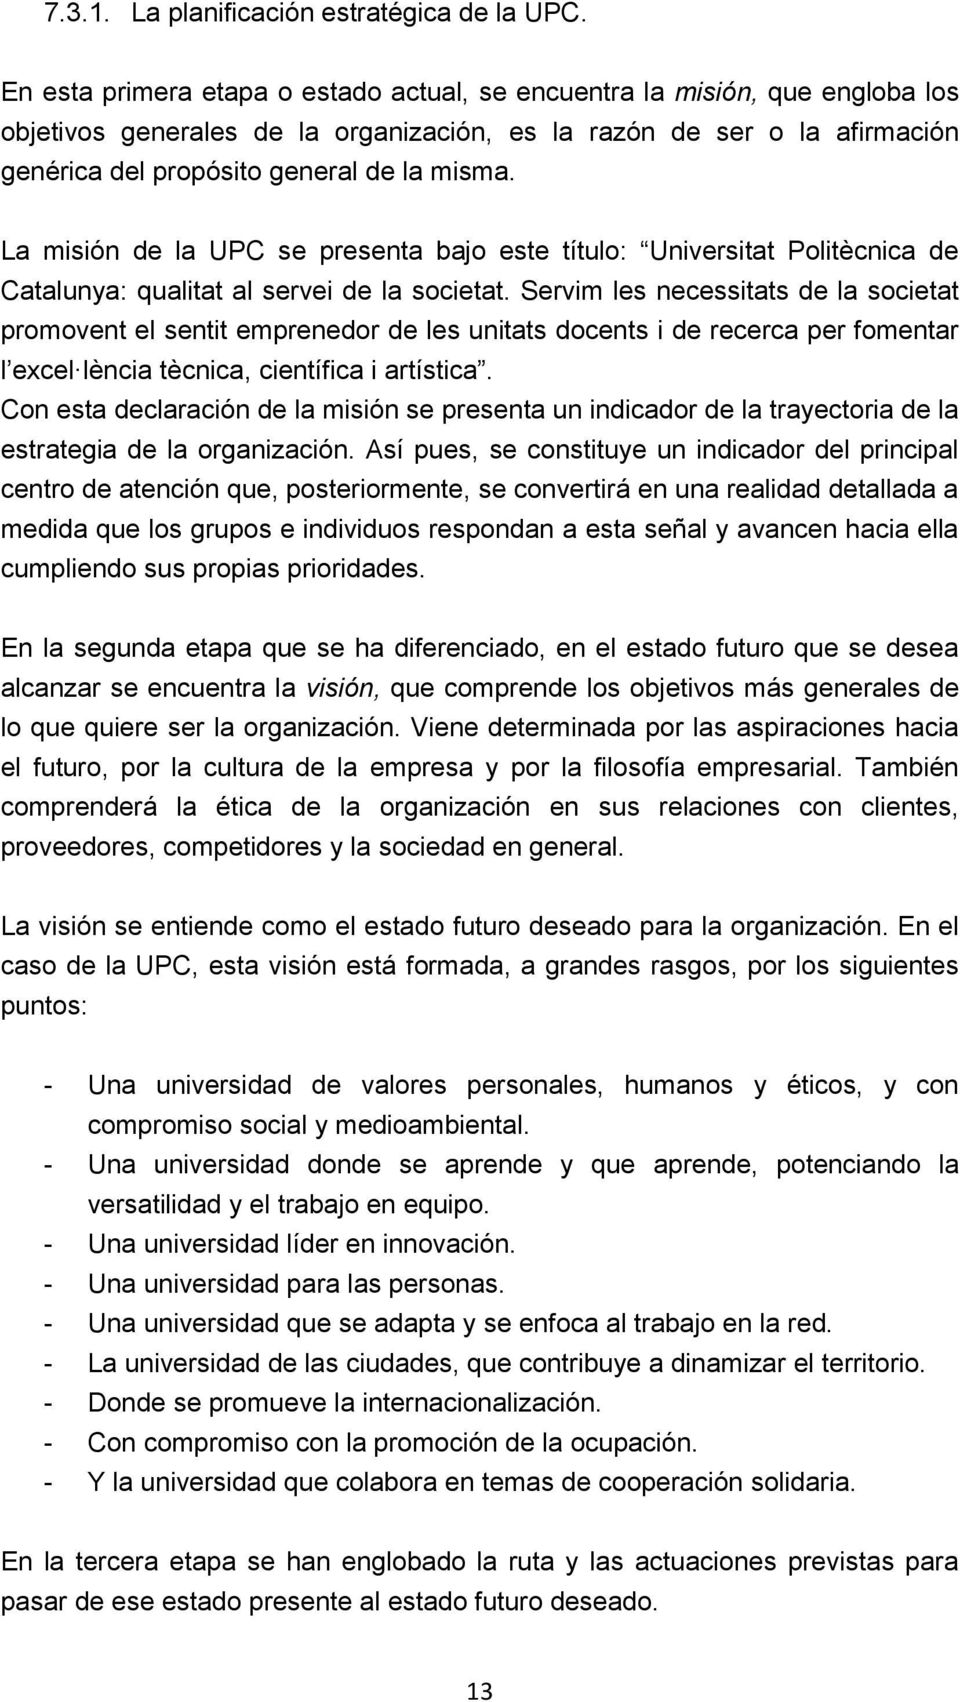 La misión de la UPC se presenta bajo este título: Universitat Politècnica de Catalunya: qualitat al servei de la societat.